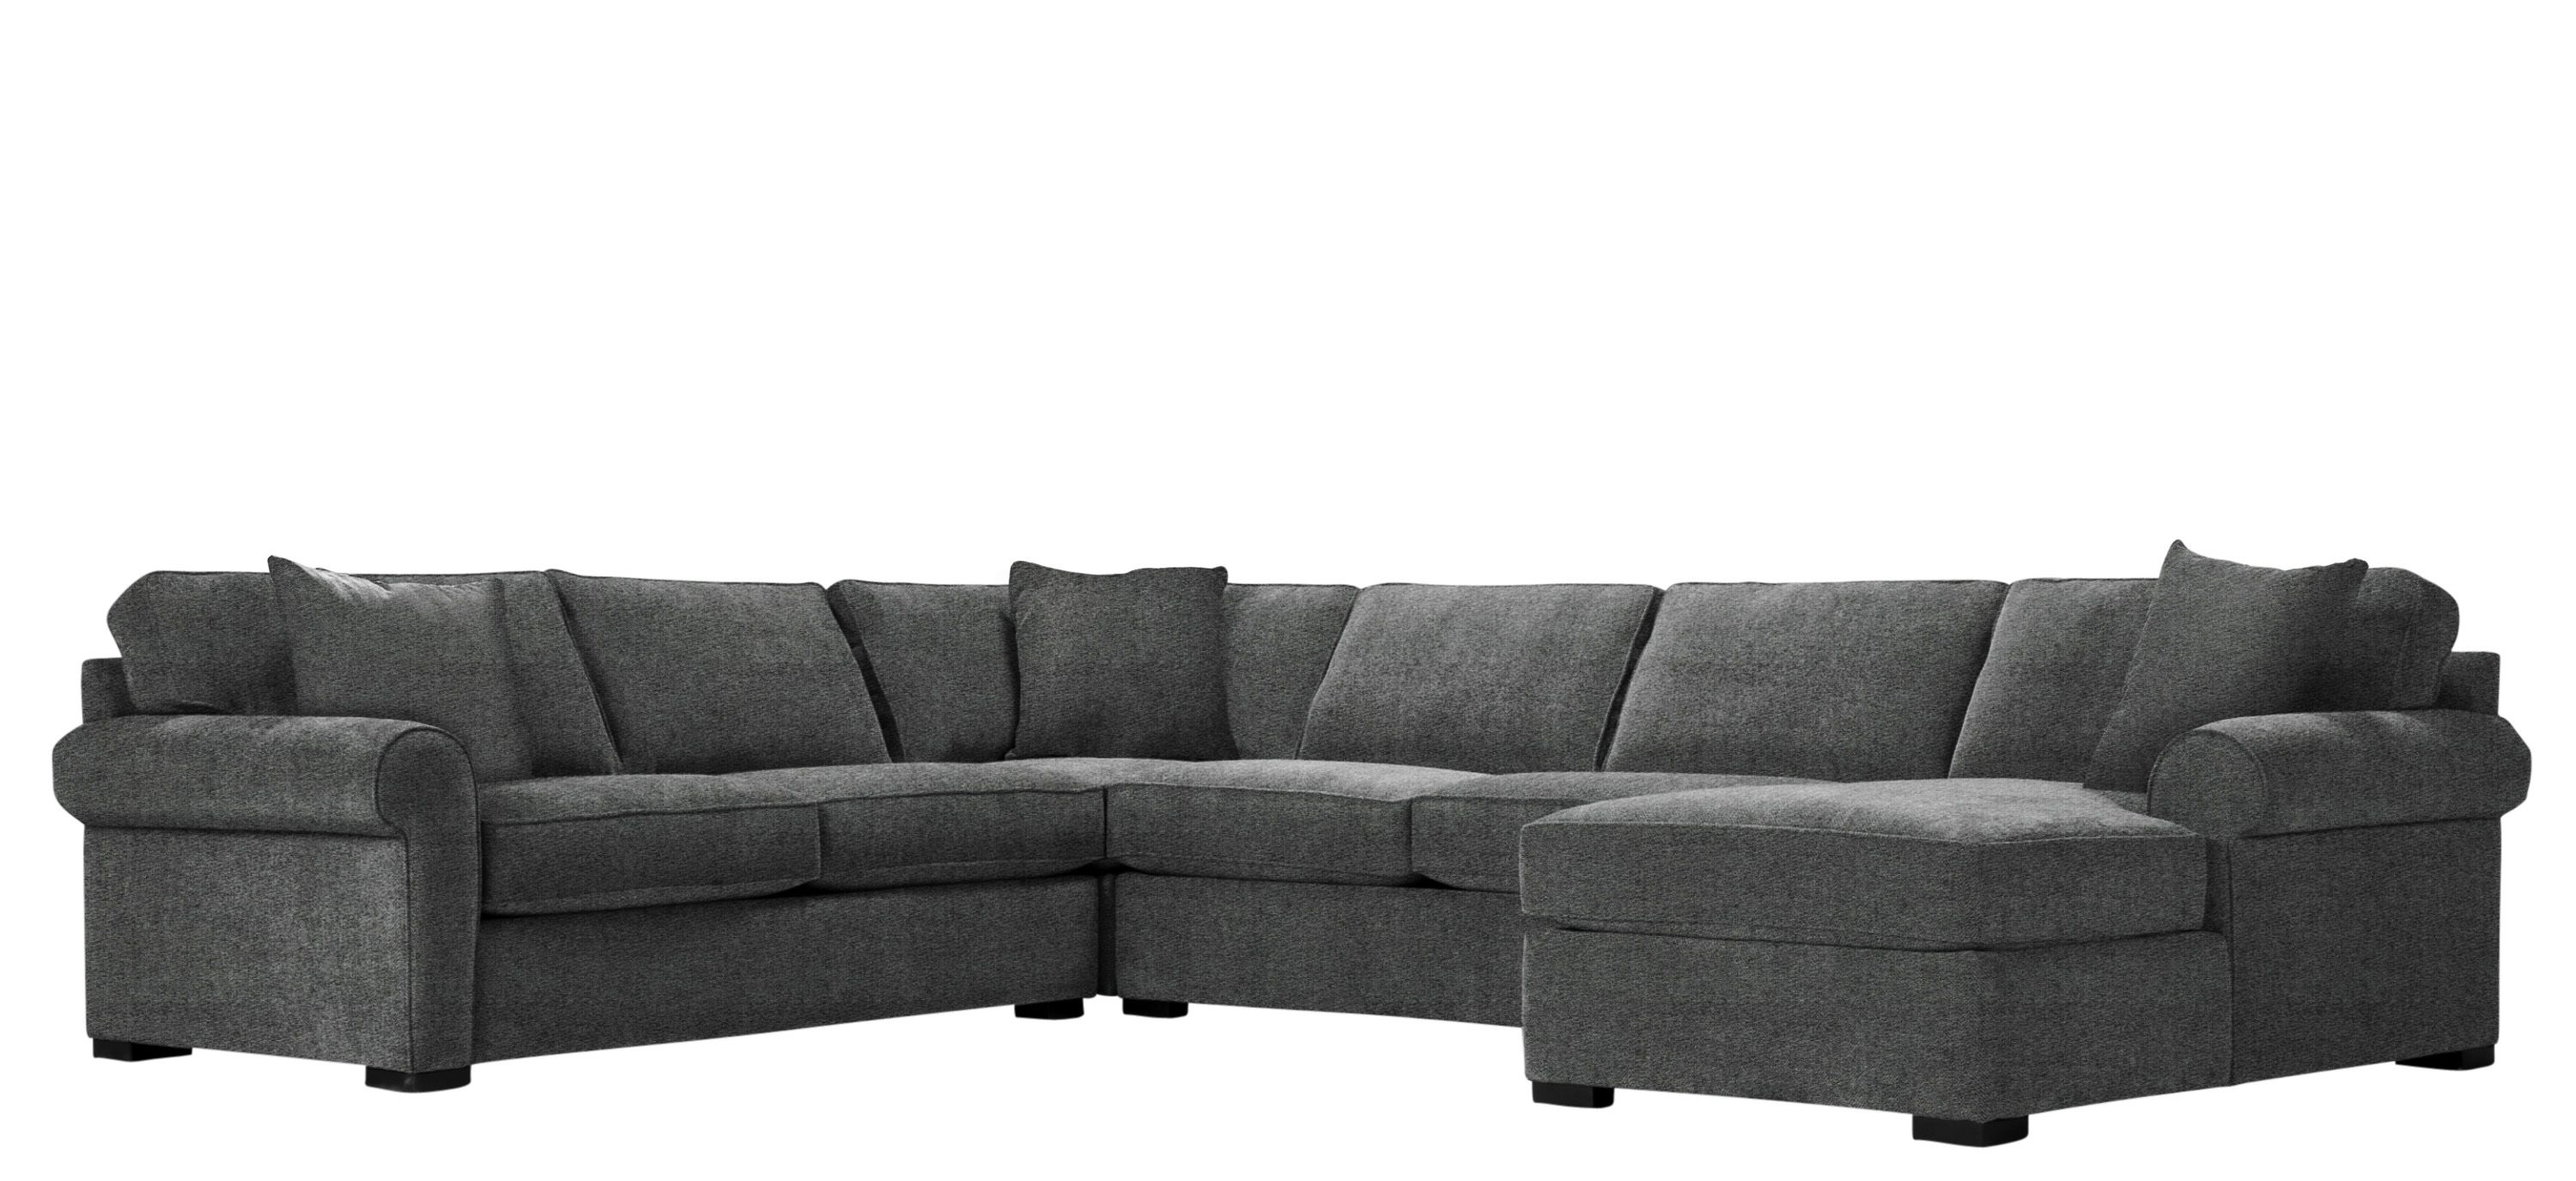 Kipling 4-pc. Right-Hand-Facing Sectional Sofa